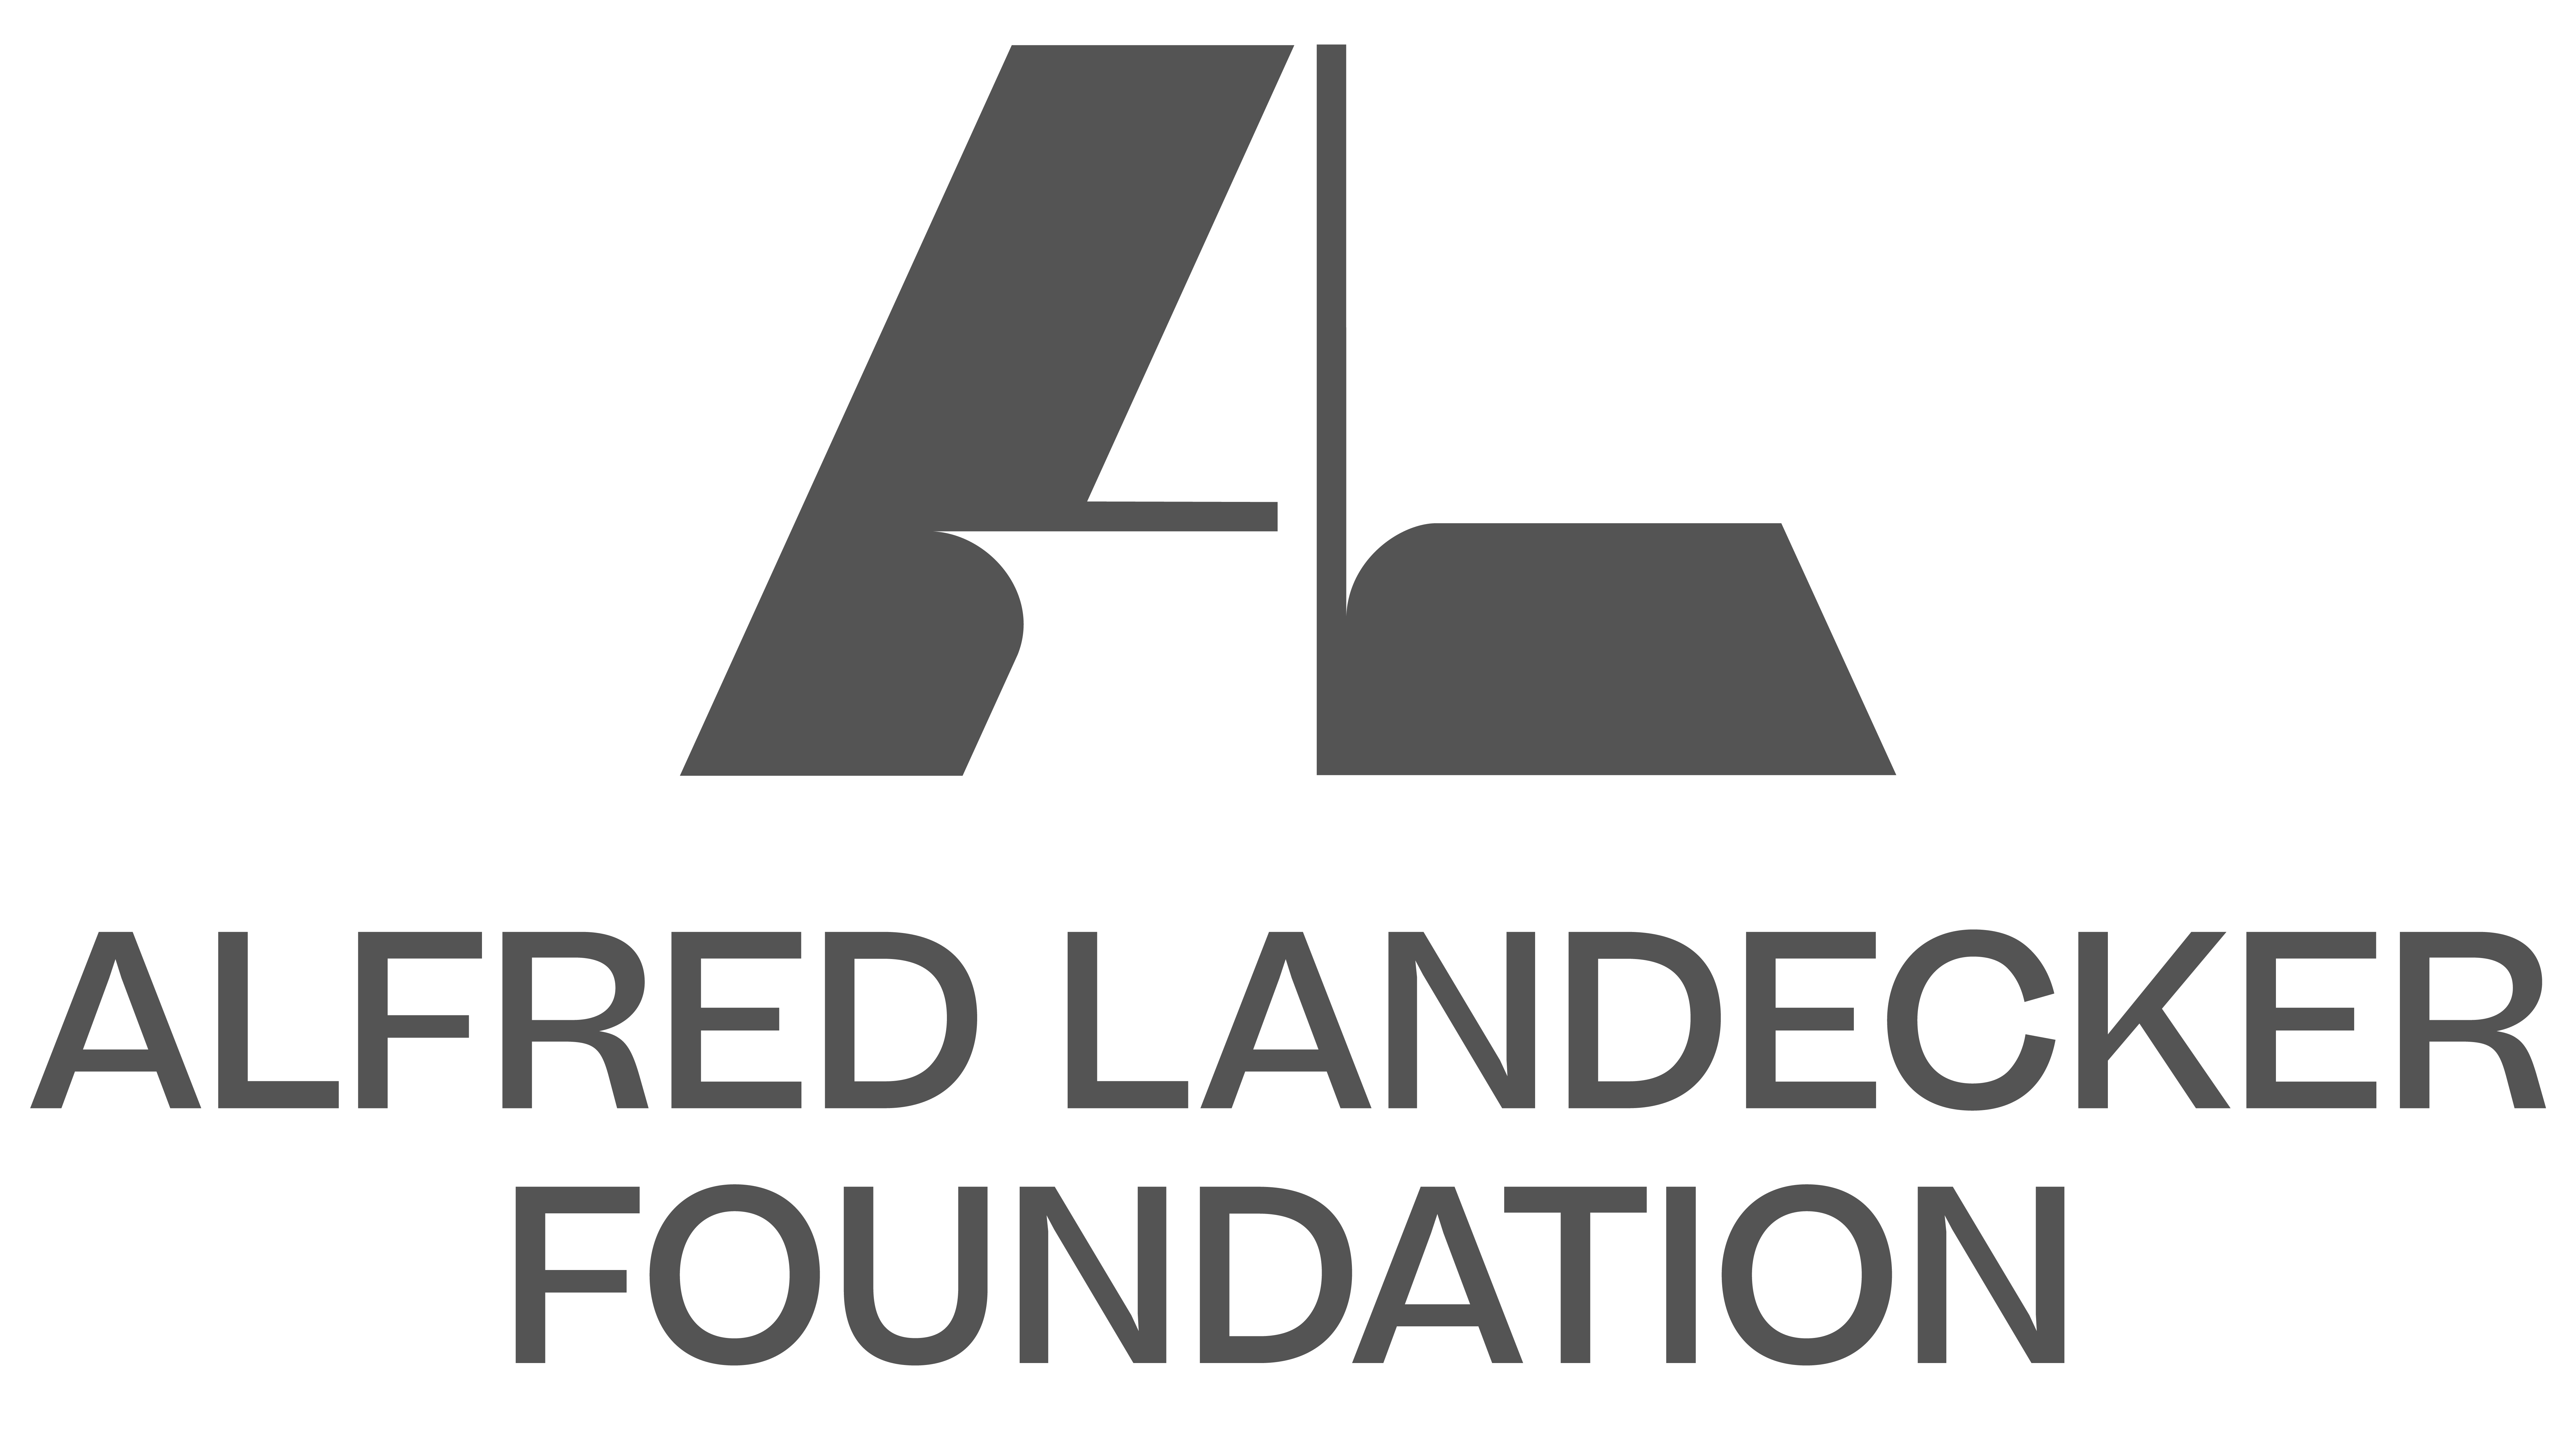 The Alfred Landecker Foundation